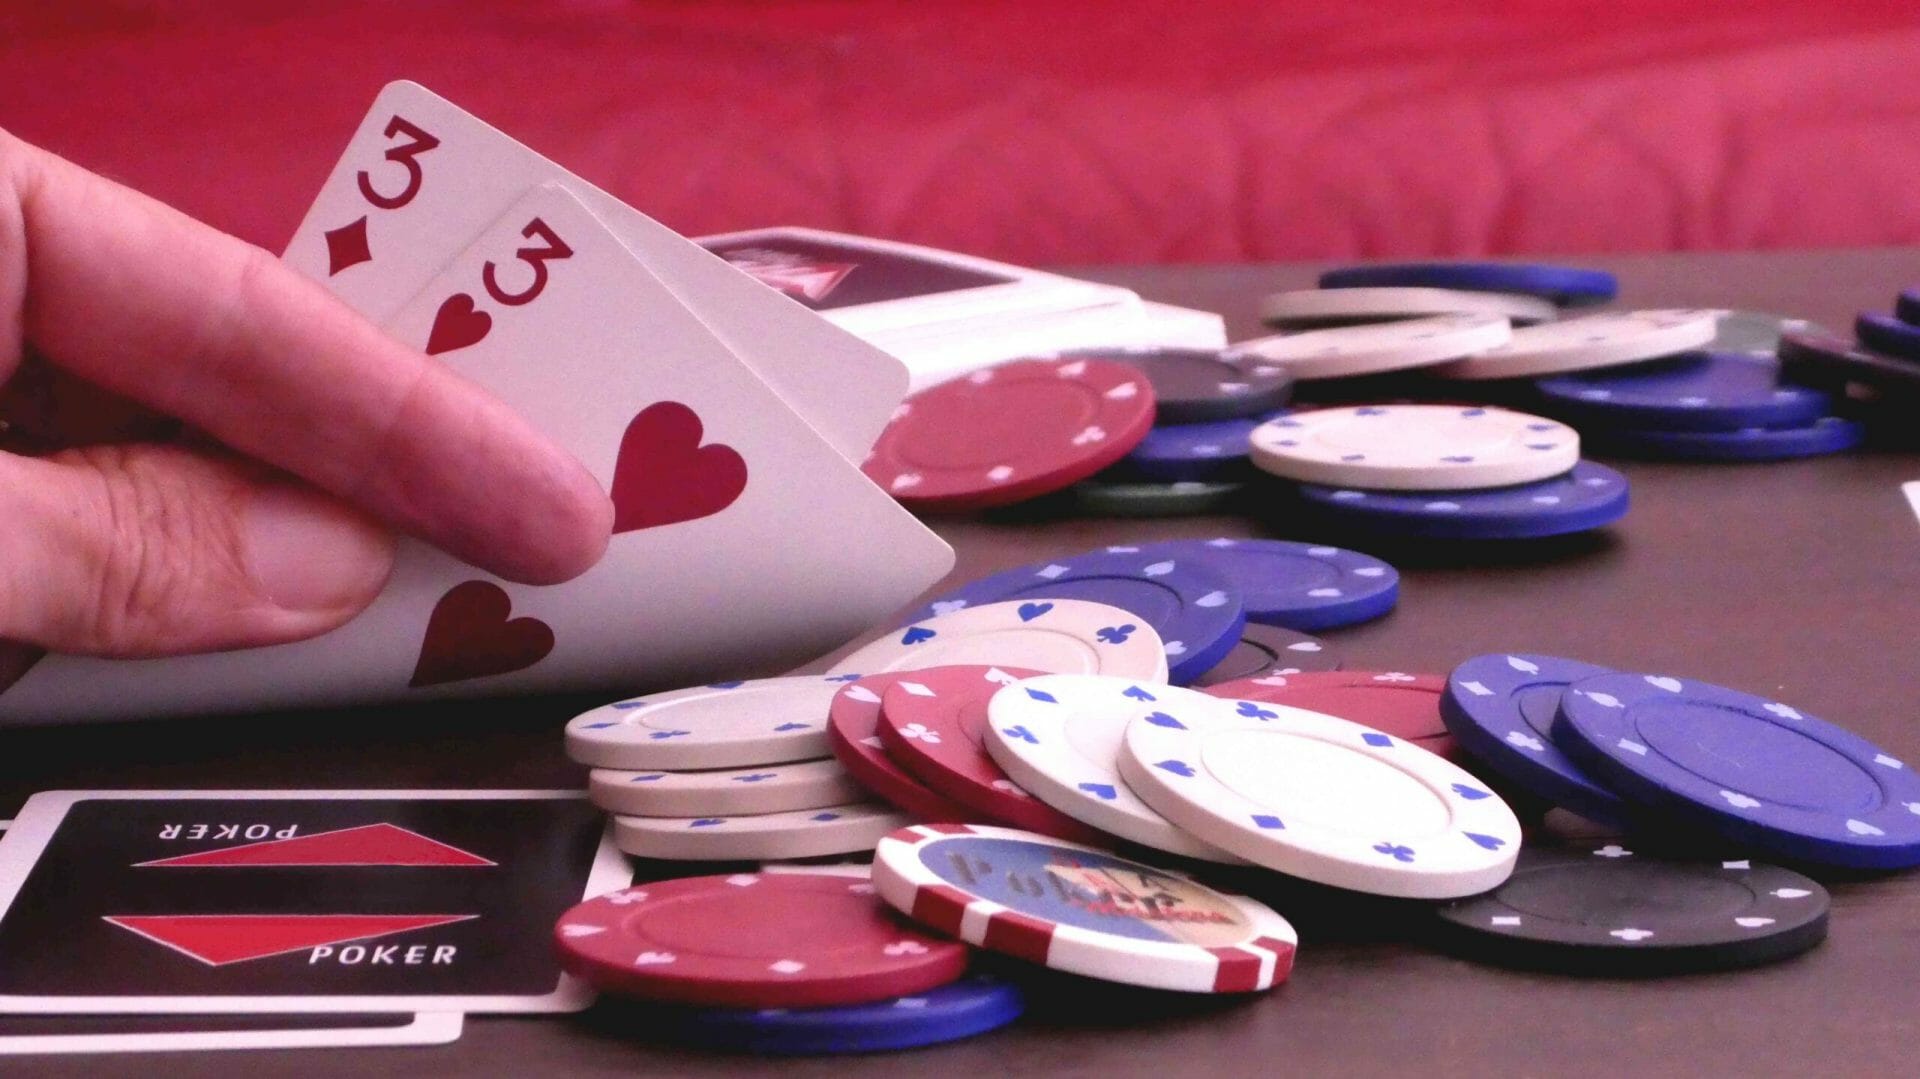 Cartas royal flush. jogo de cartas, cartas na mesa. poker e blackjack,  cartas de jogar.